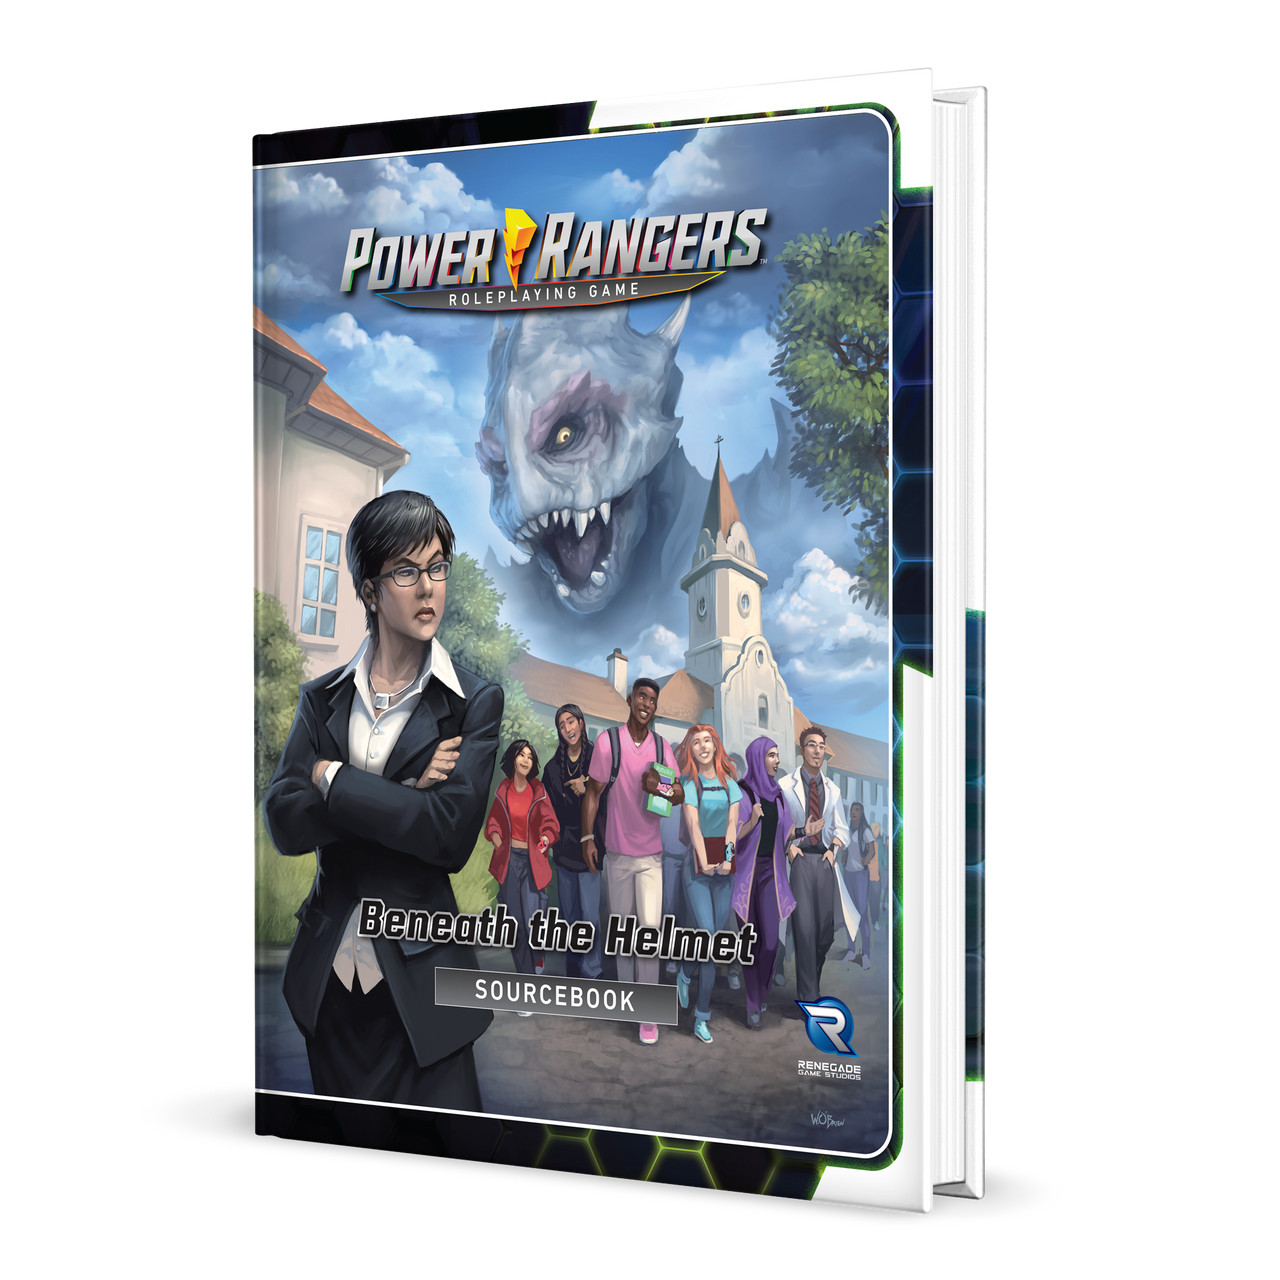 Power Rangers Roleplaying Game Beneath the Helmet Sourcebook [Book]